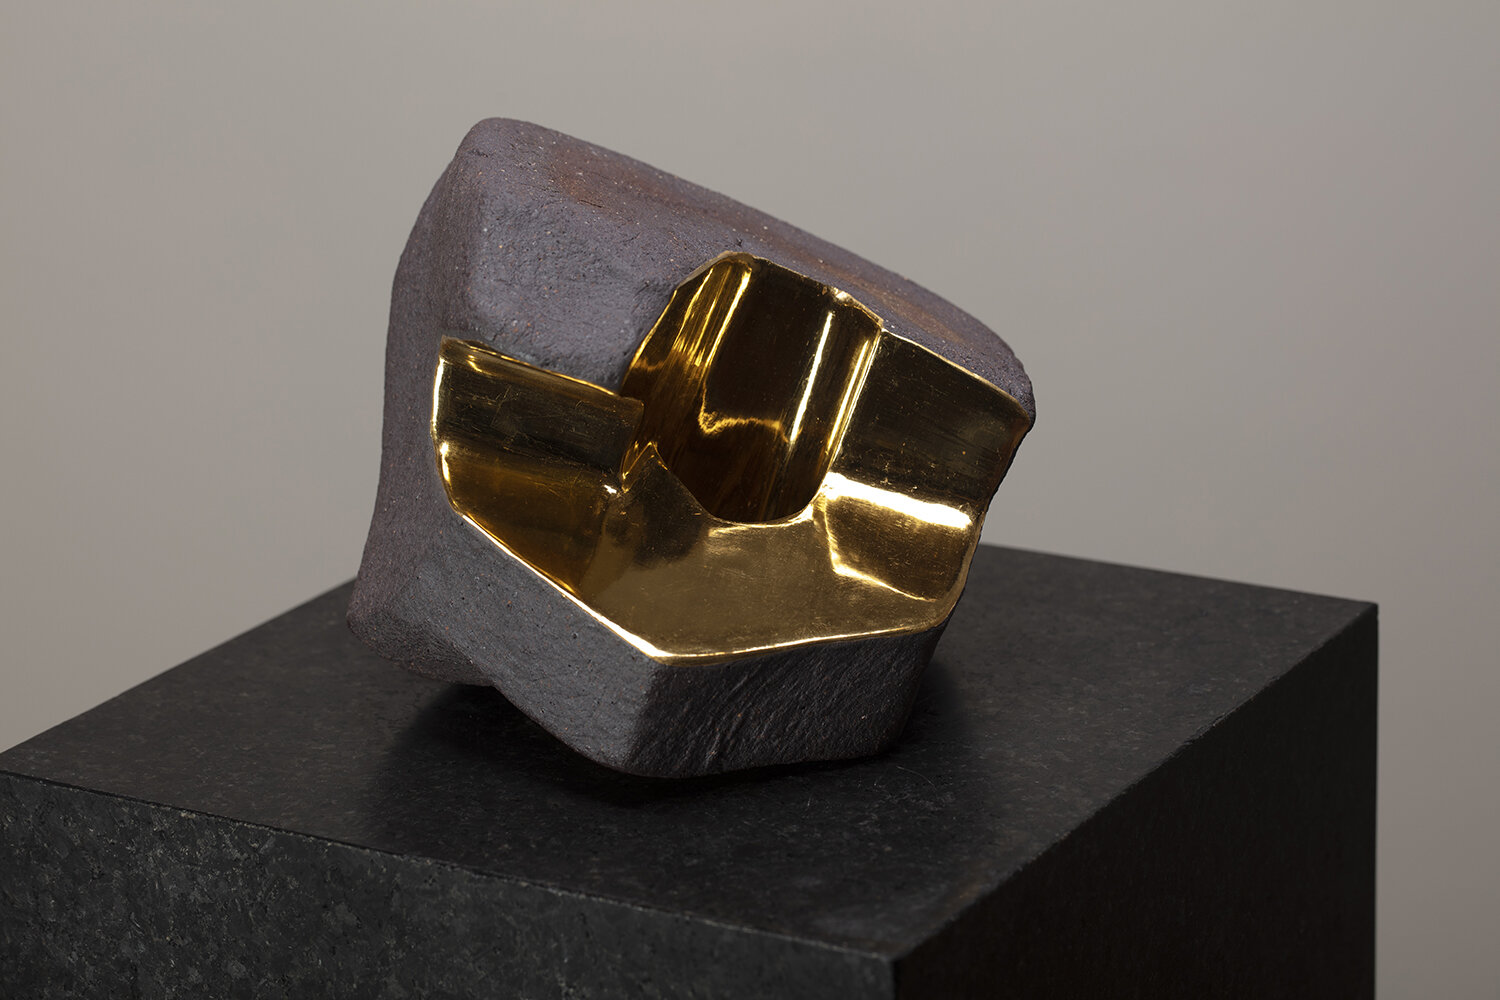 UNTITLED - CERAMIC AND GOLD sculpture 2020/3 - J. Yázpik